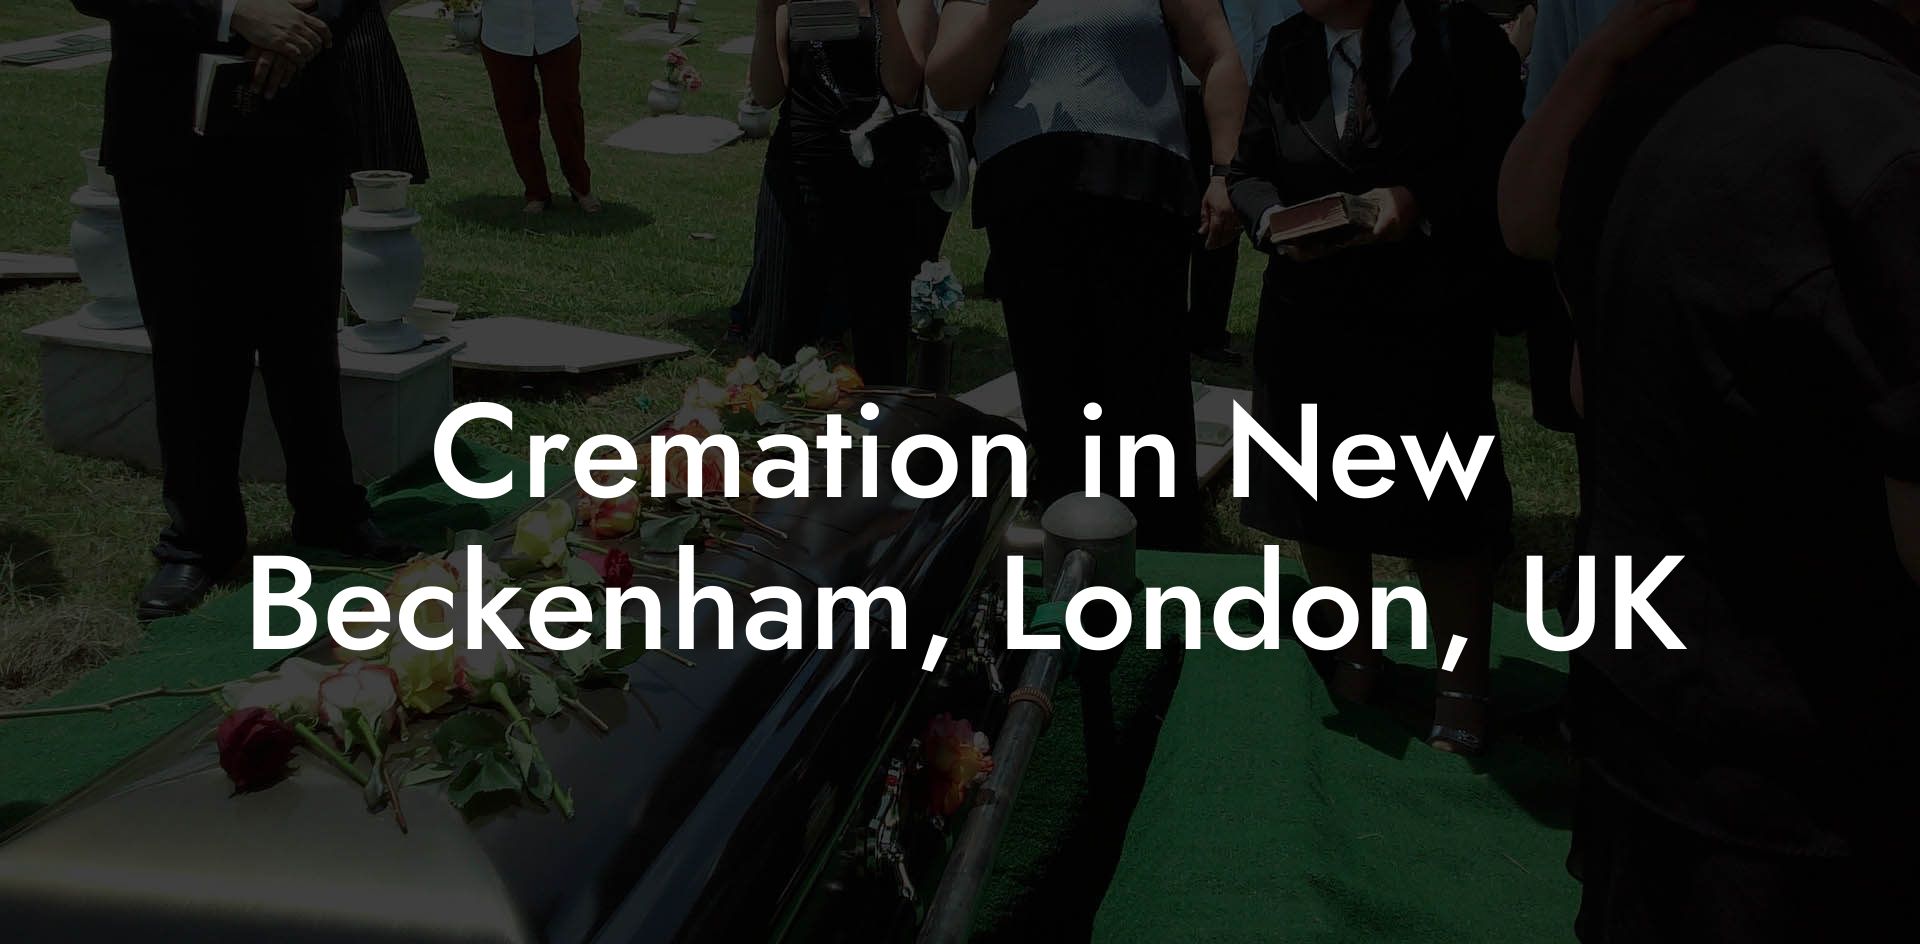 Cremation in New Beckenham, London, UK